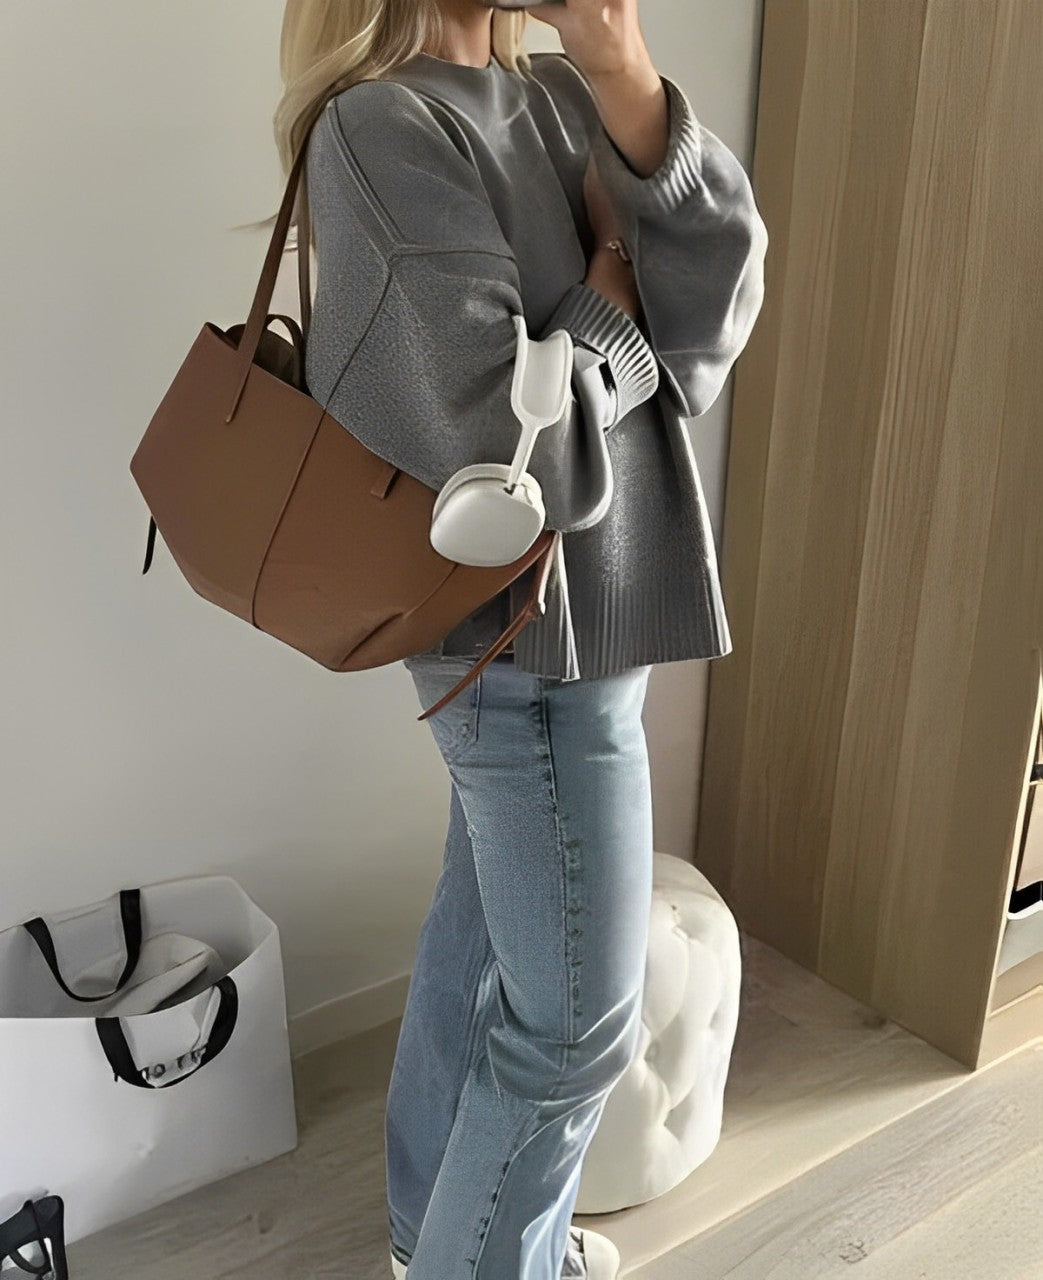 Veloura™ Luxury Mini Bag